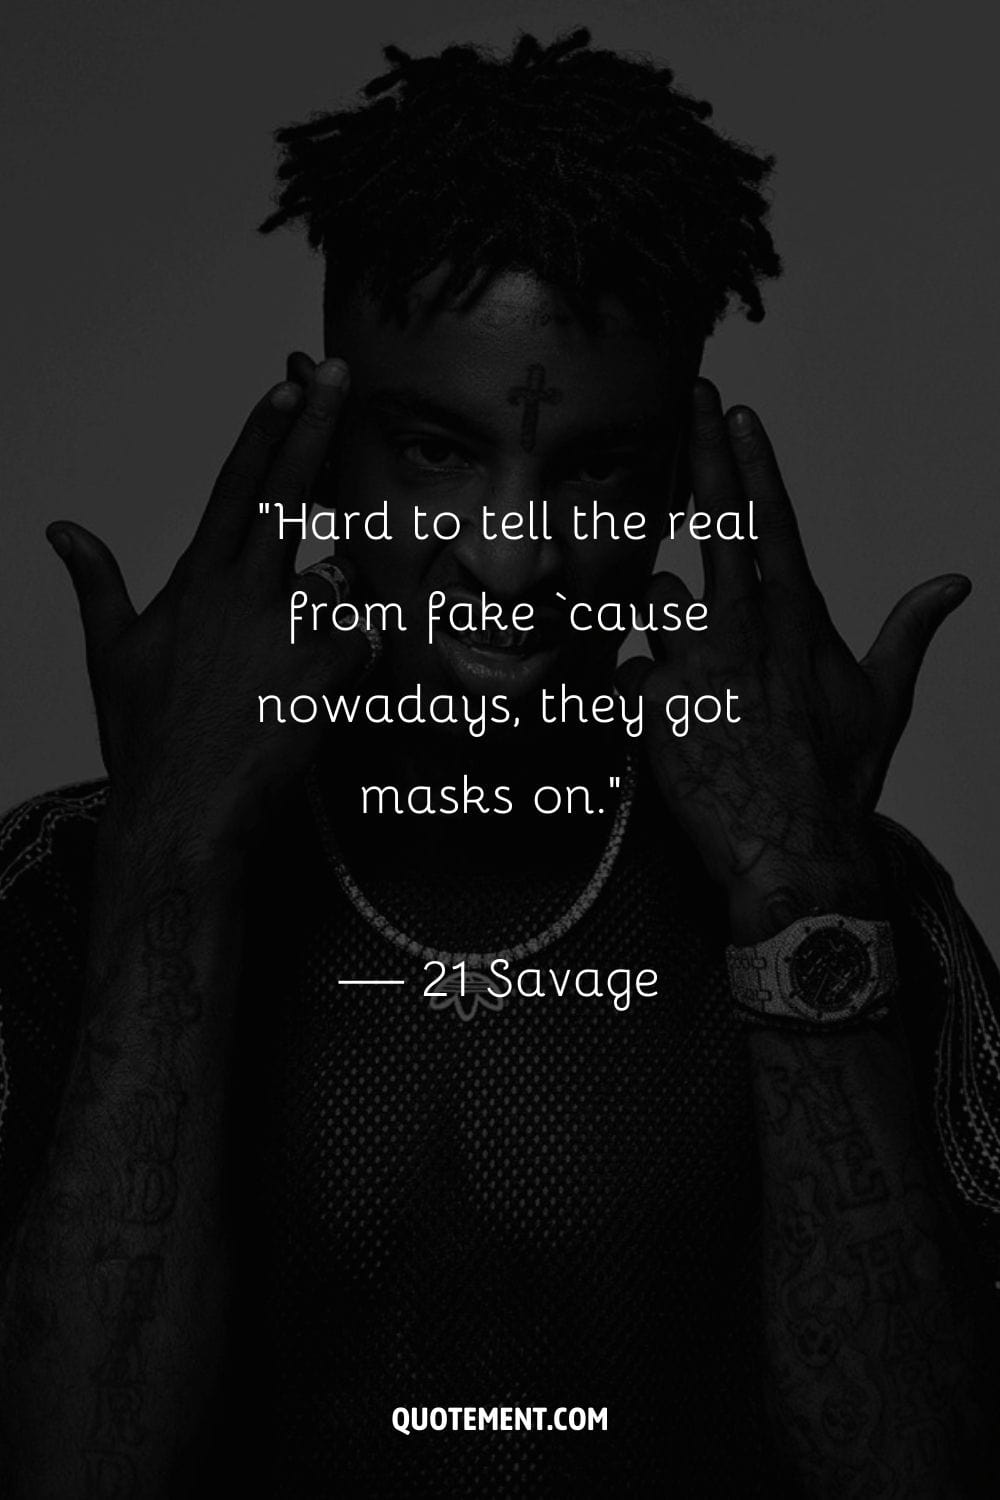 Striking image of rapper 21 Savage